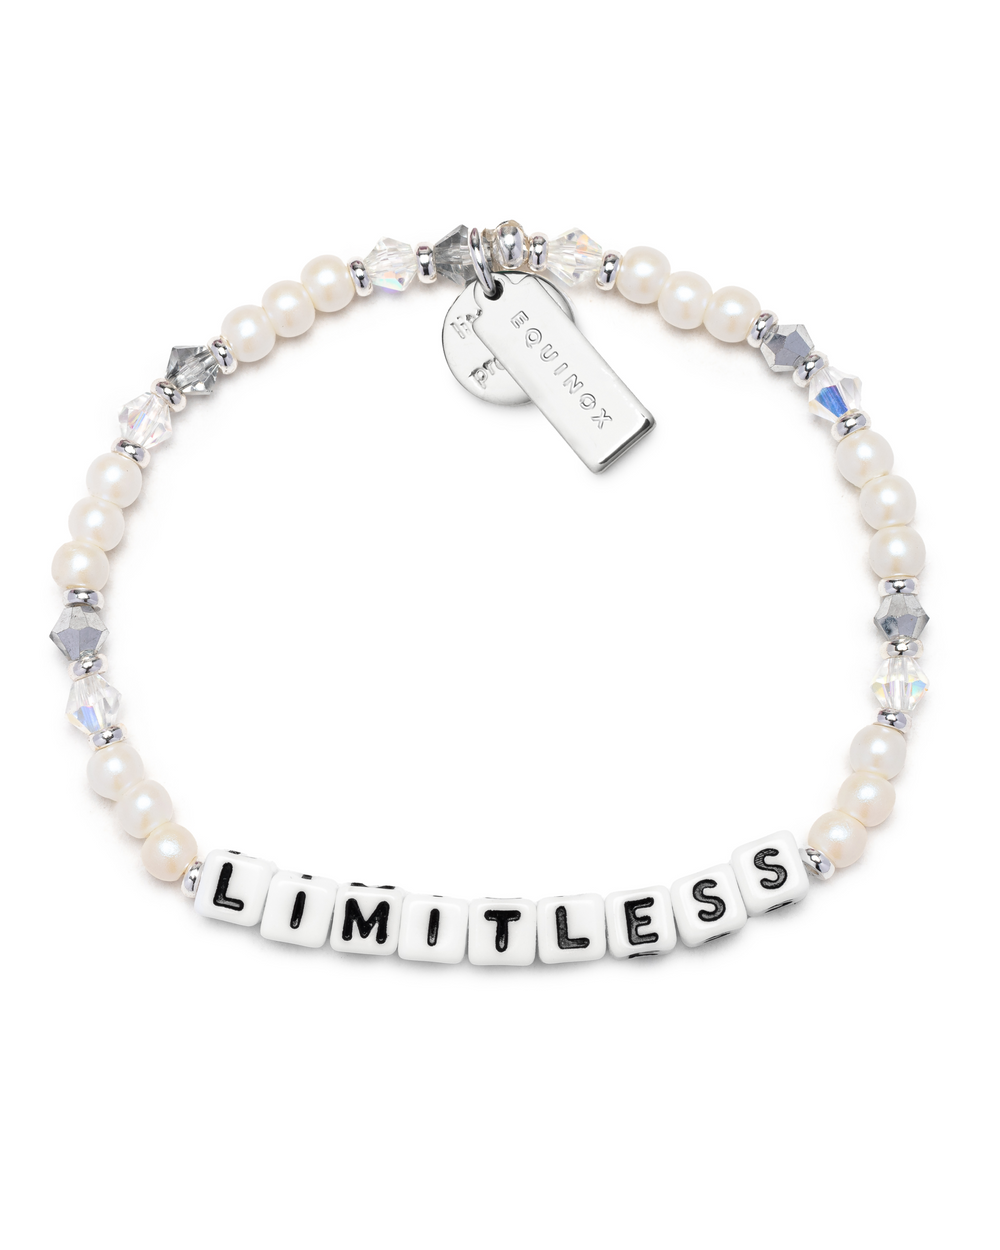 Little Words Project Equinox Limitless Bracelet